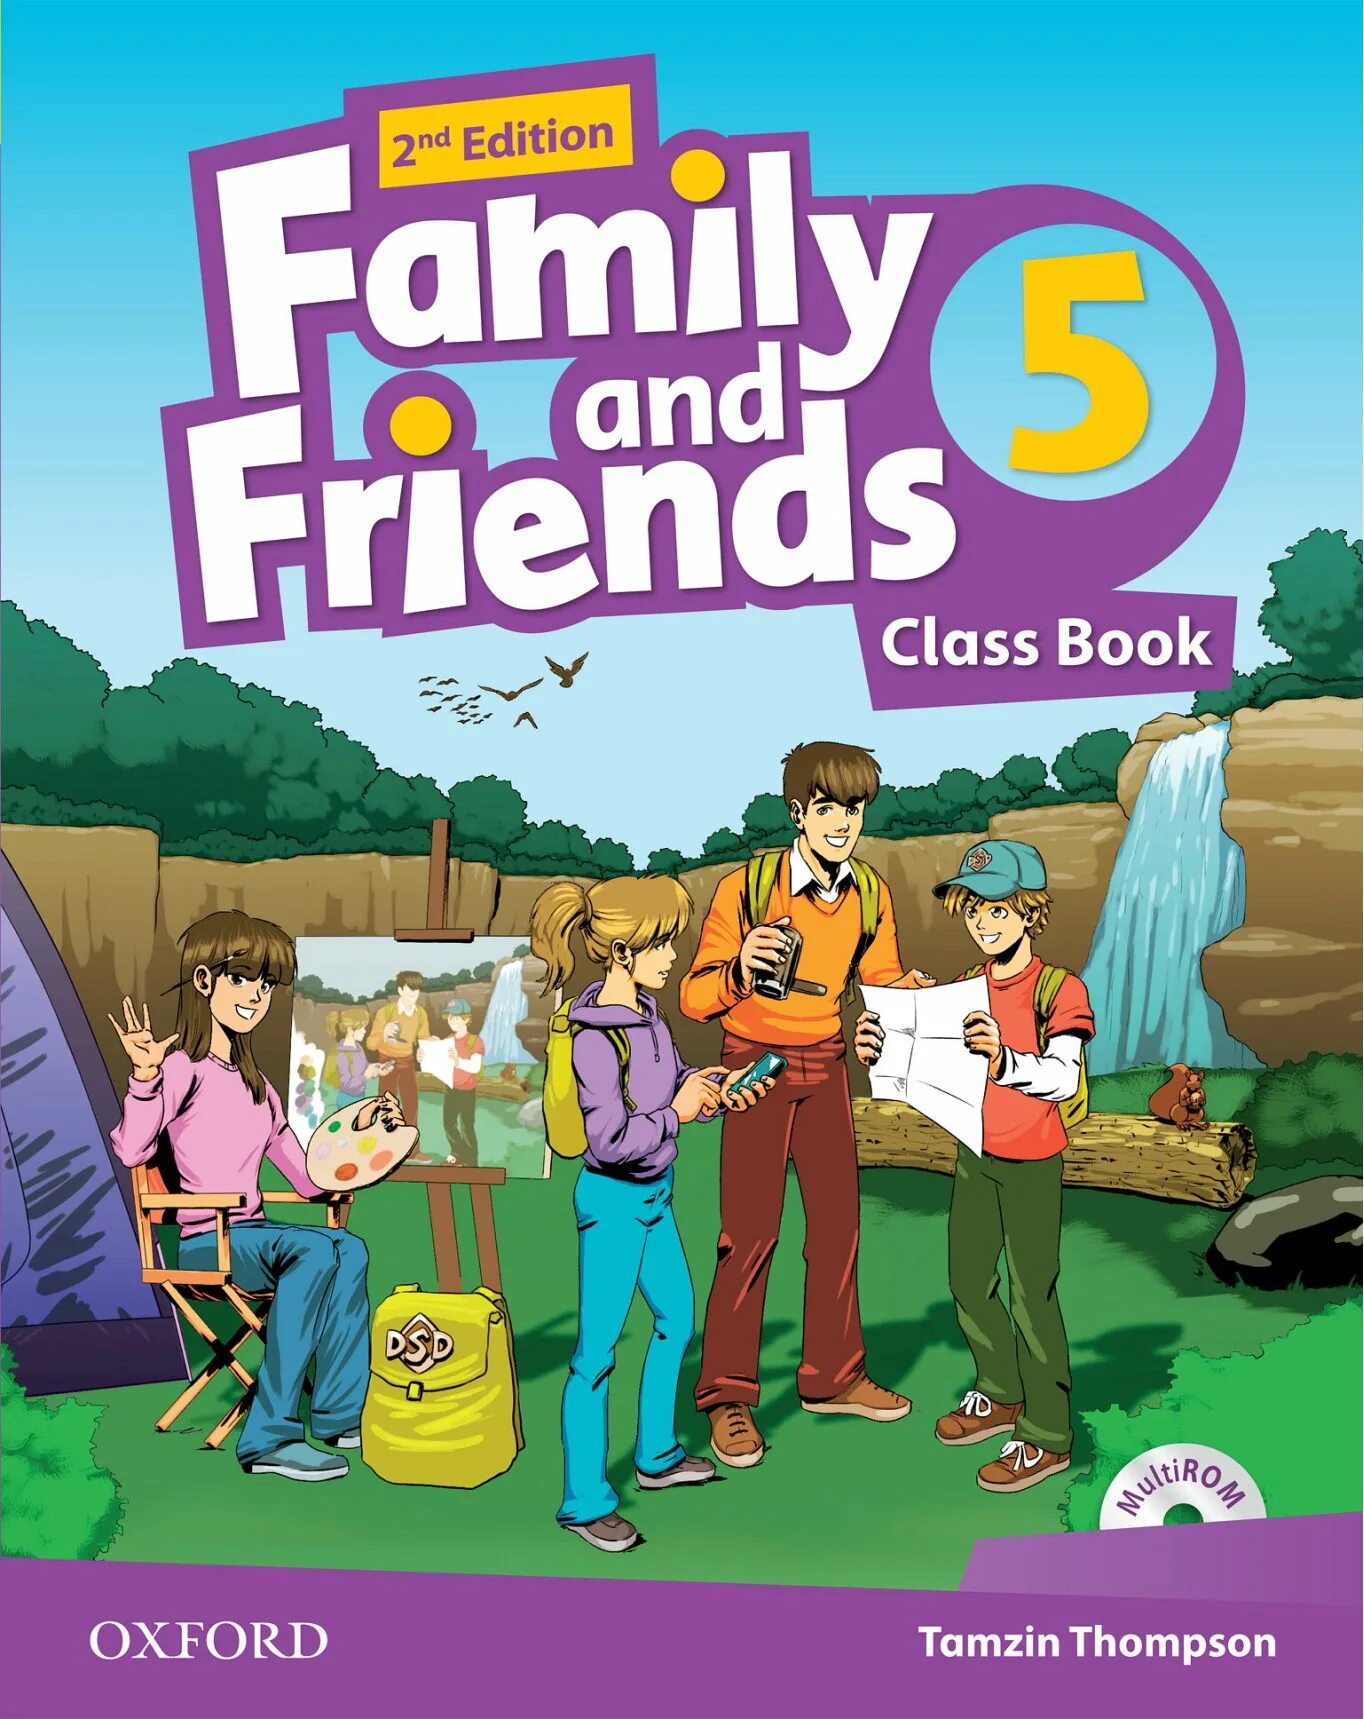 Student book 5 класс 2 часть. Учебник Family and friends 5. Фэмили френдс 6. \Фэмили энд френдс 2 издание. Family and friends 3 2nd Edition.